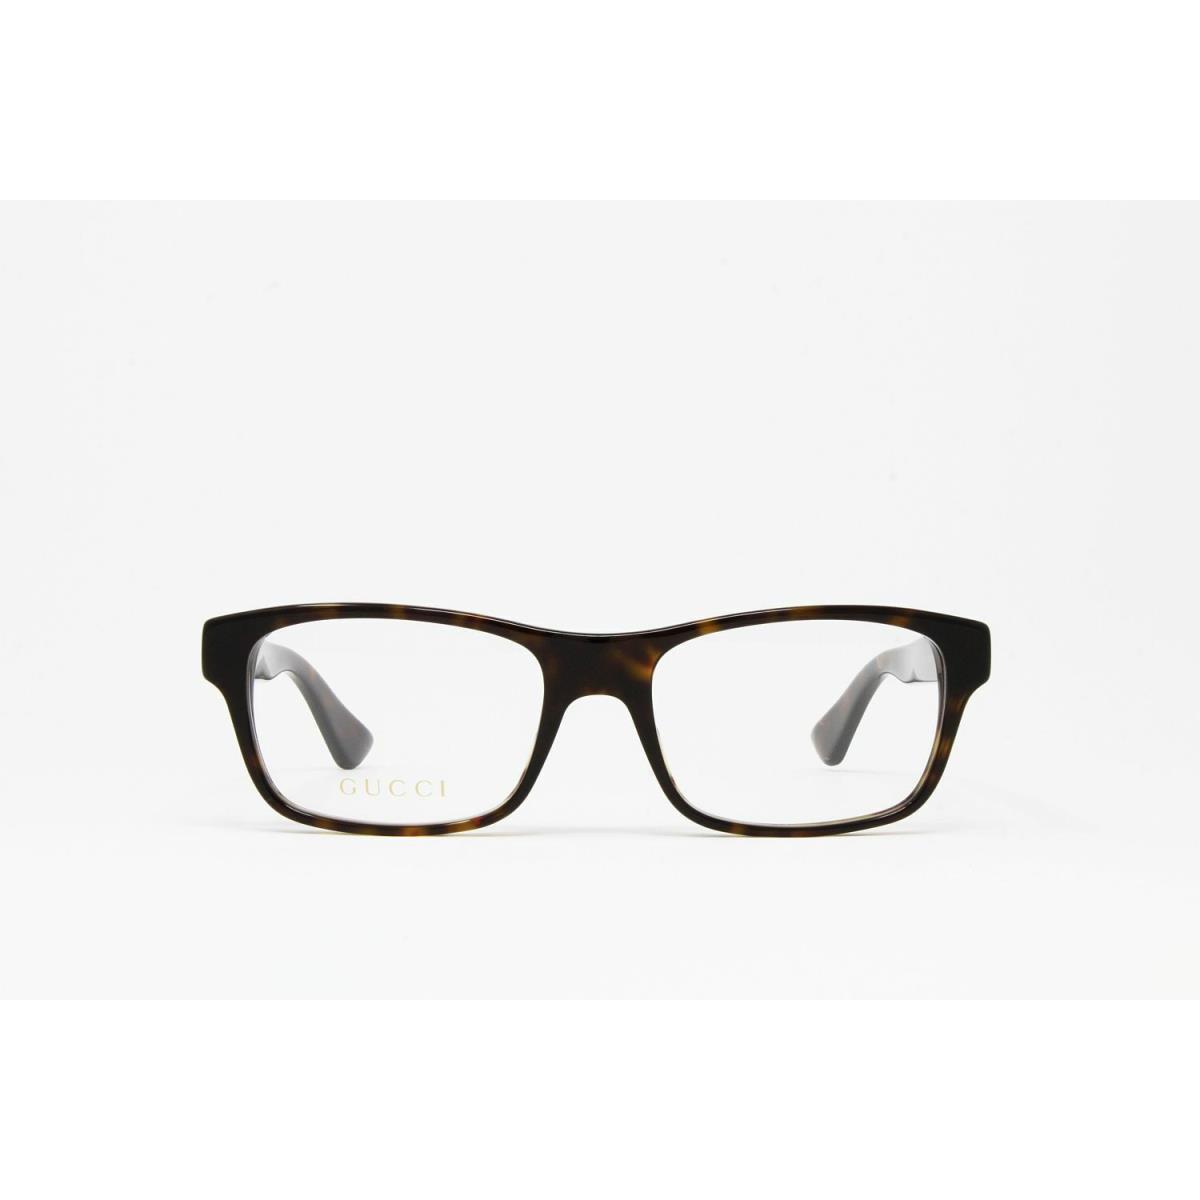 Gucci eyeglasses  - Havana Frame 0